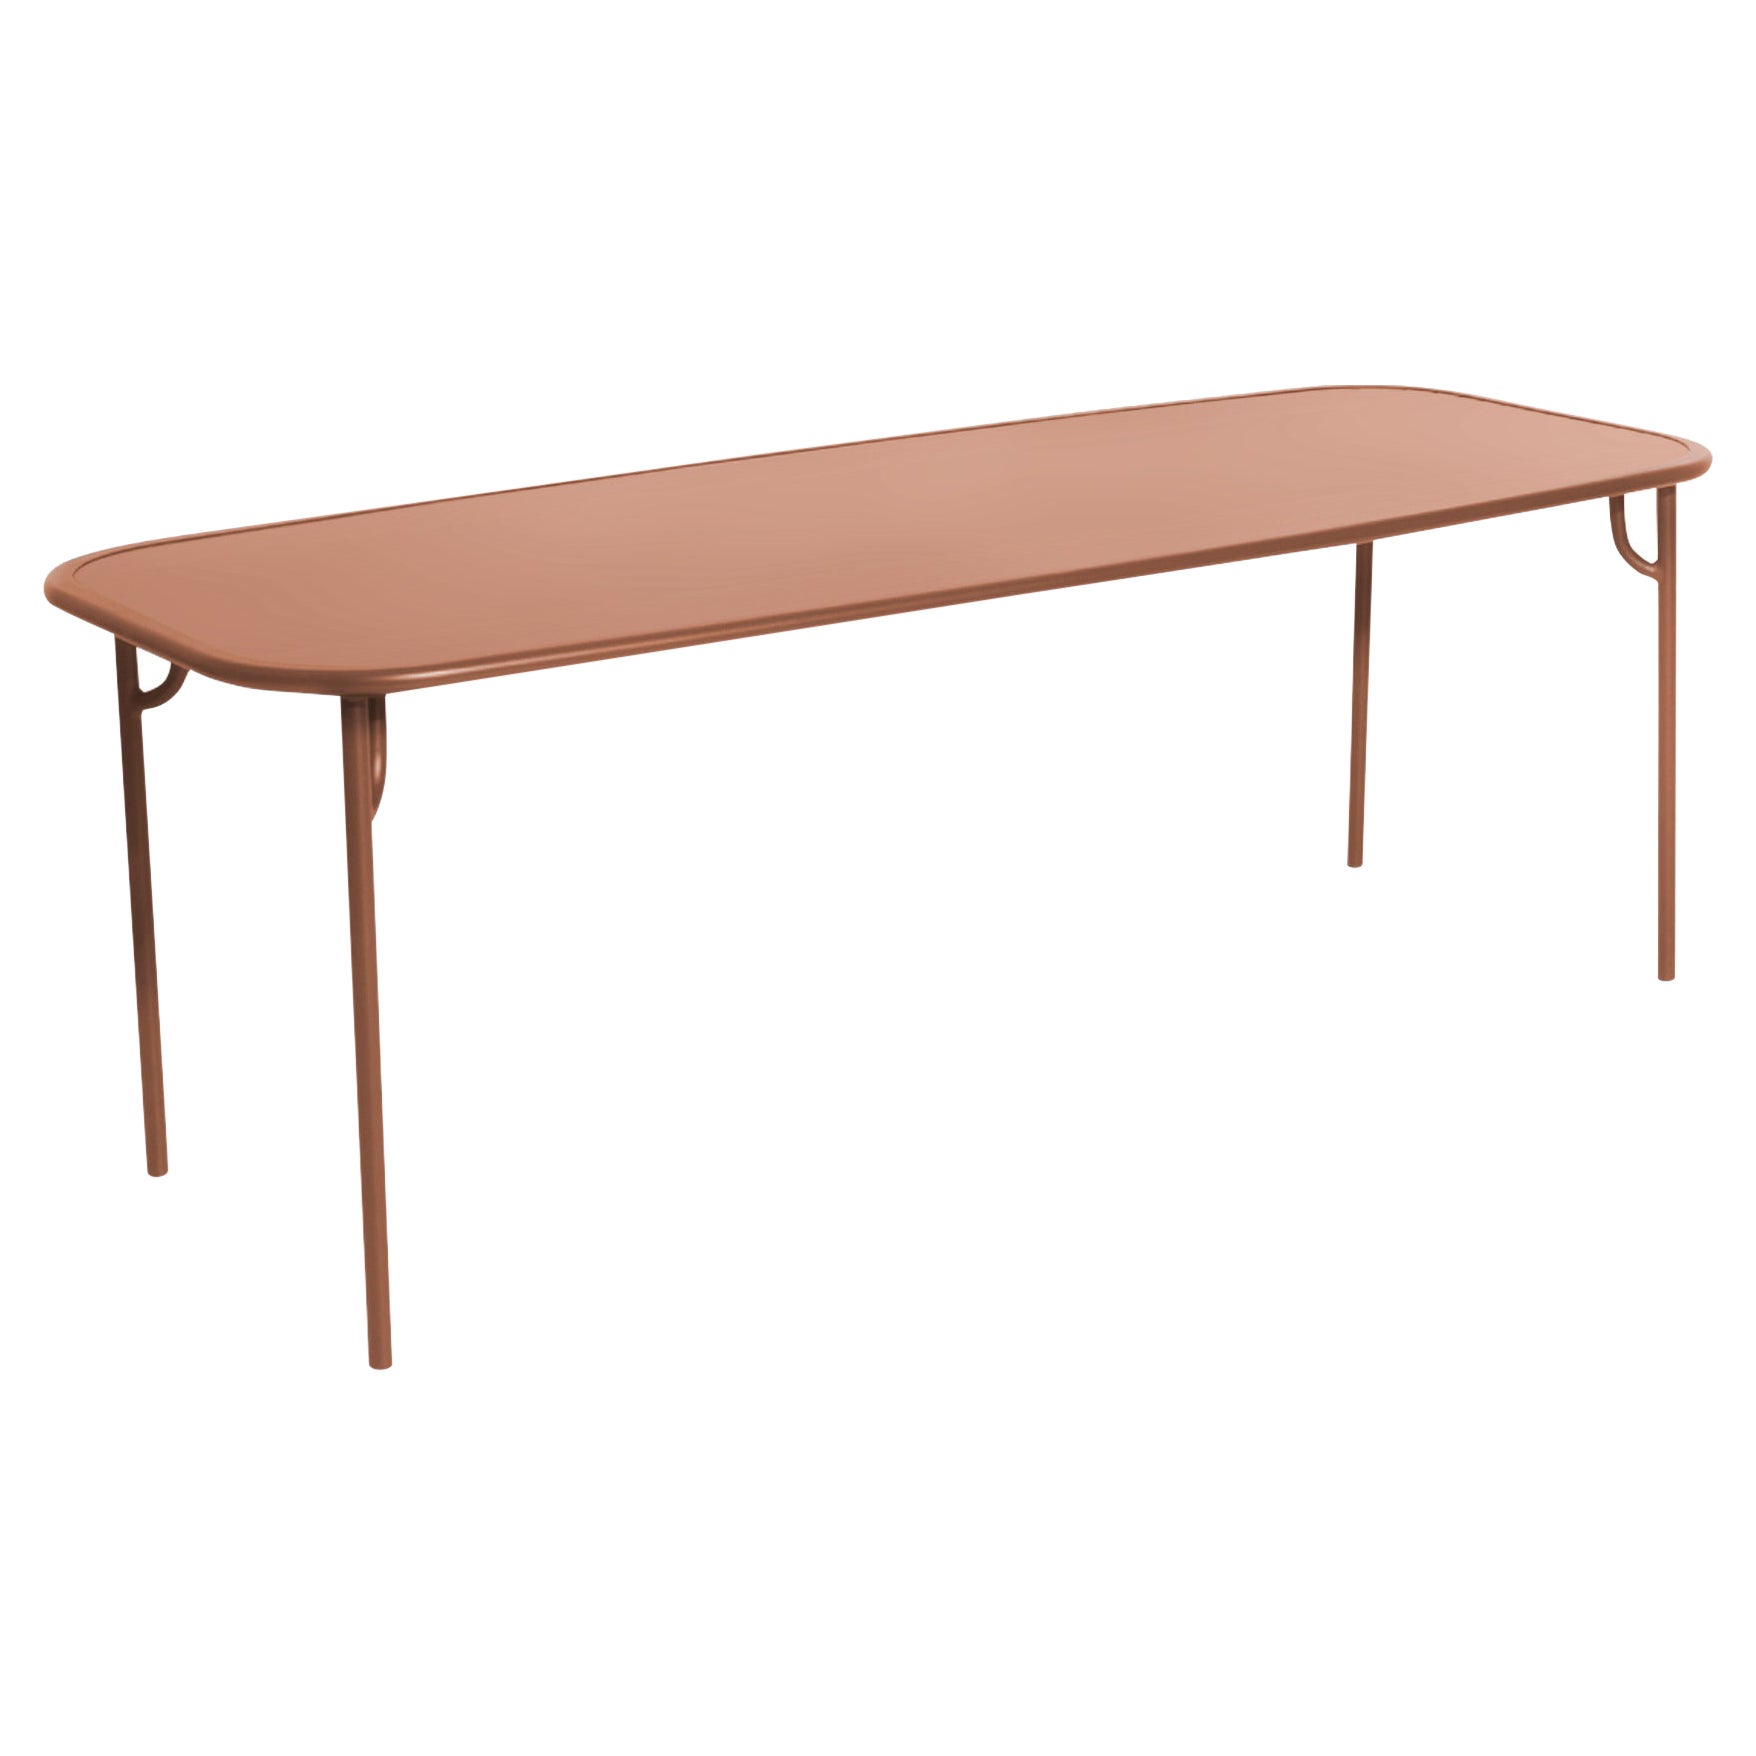 Petite Friture Week-End Large Plain Rectangular Dining Table in Terracotta